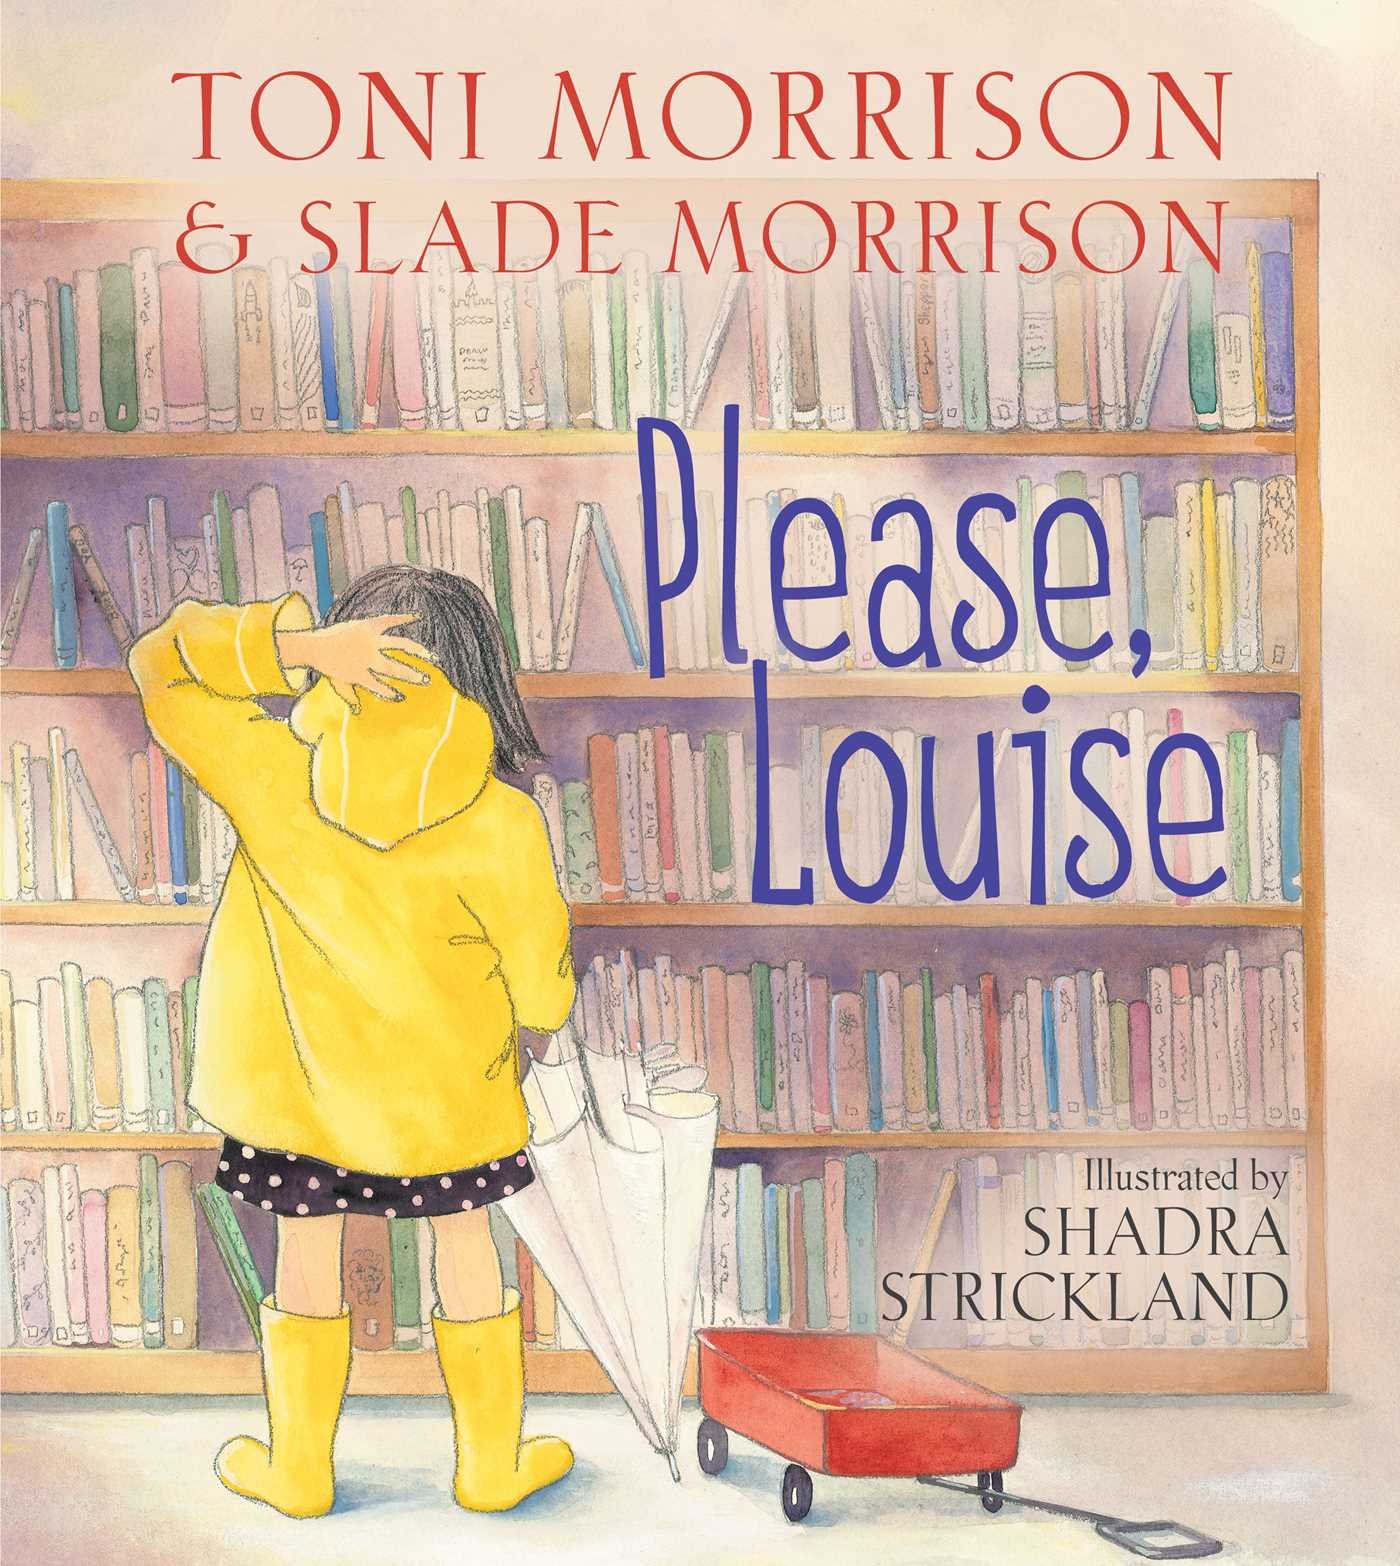 "Please, Louise" by Toni Morrison & Slade Morrison - Book Cover